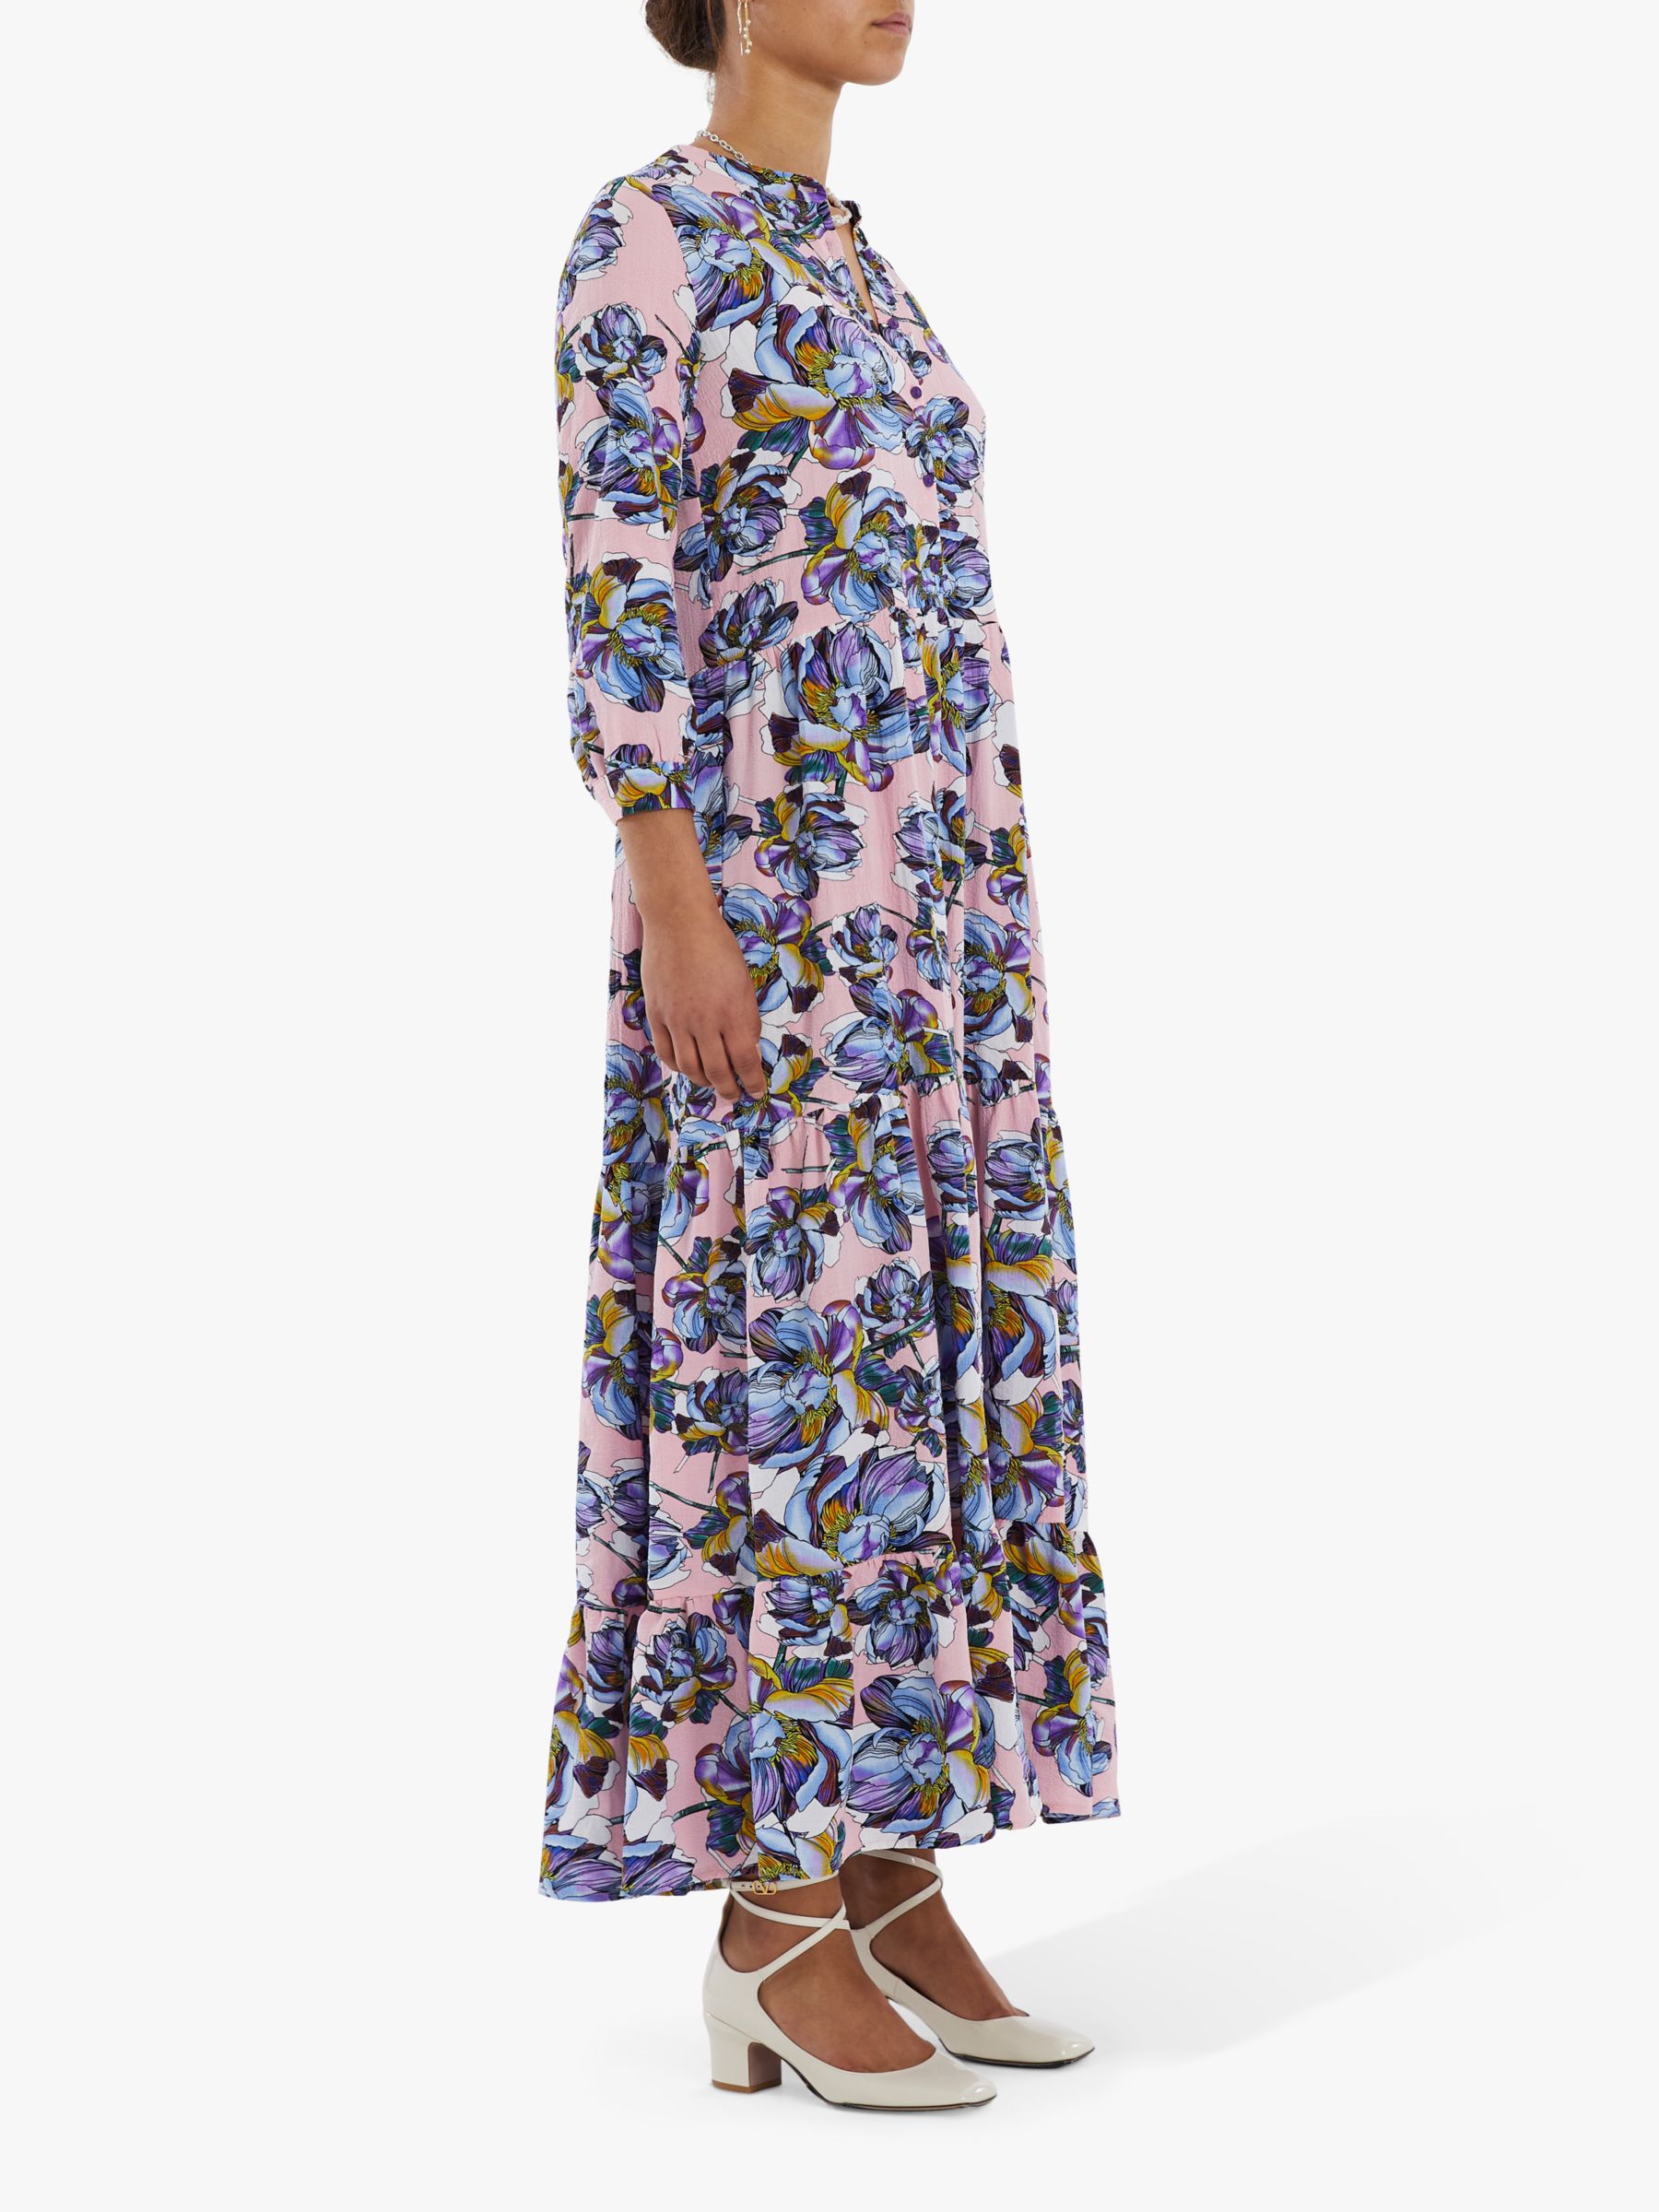 Lollys Laundry Nee Long Sleeve Floral Print Maxi Dress, Multi, XS